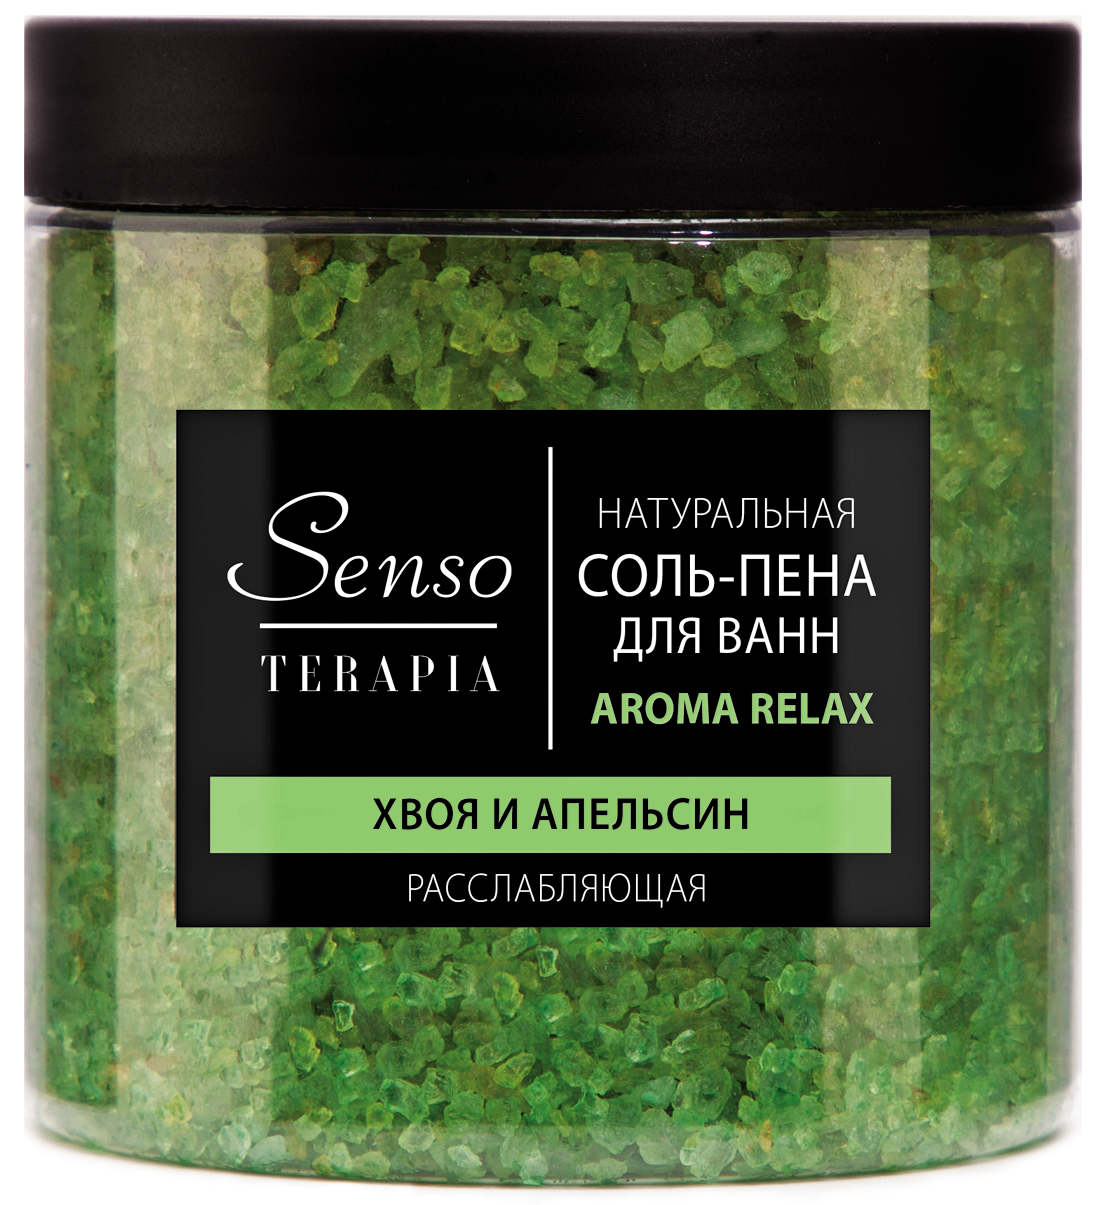 Соль-пена для ванн Senso Terapia расслабляющая «Aroma Relax» - фото 7